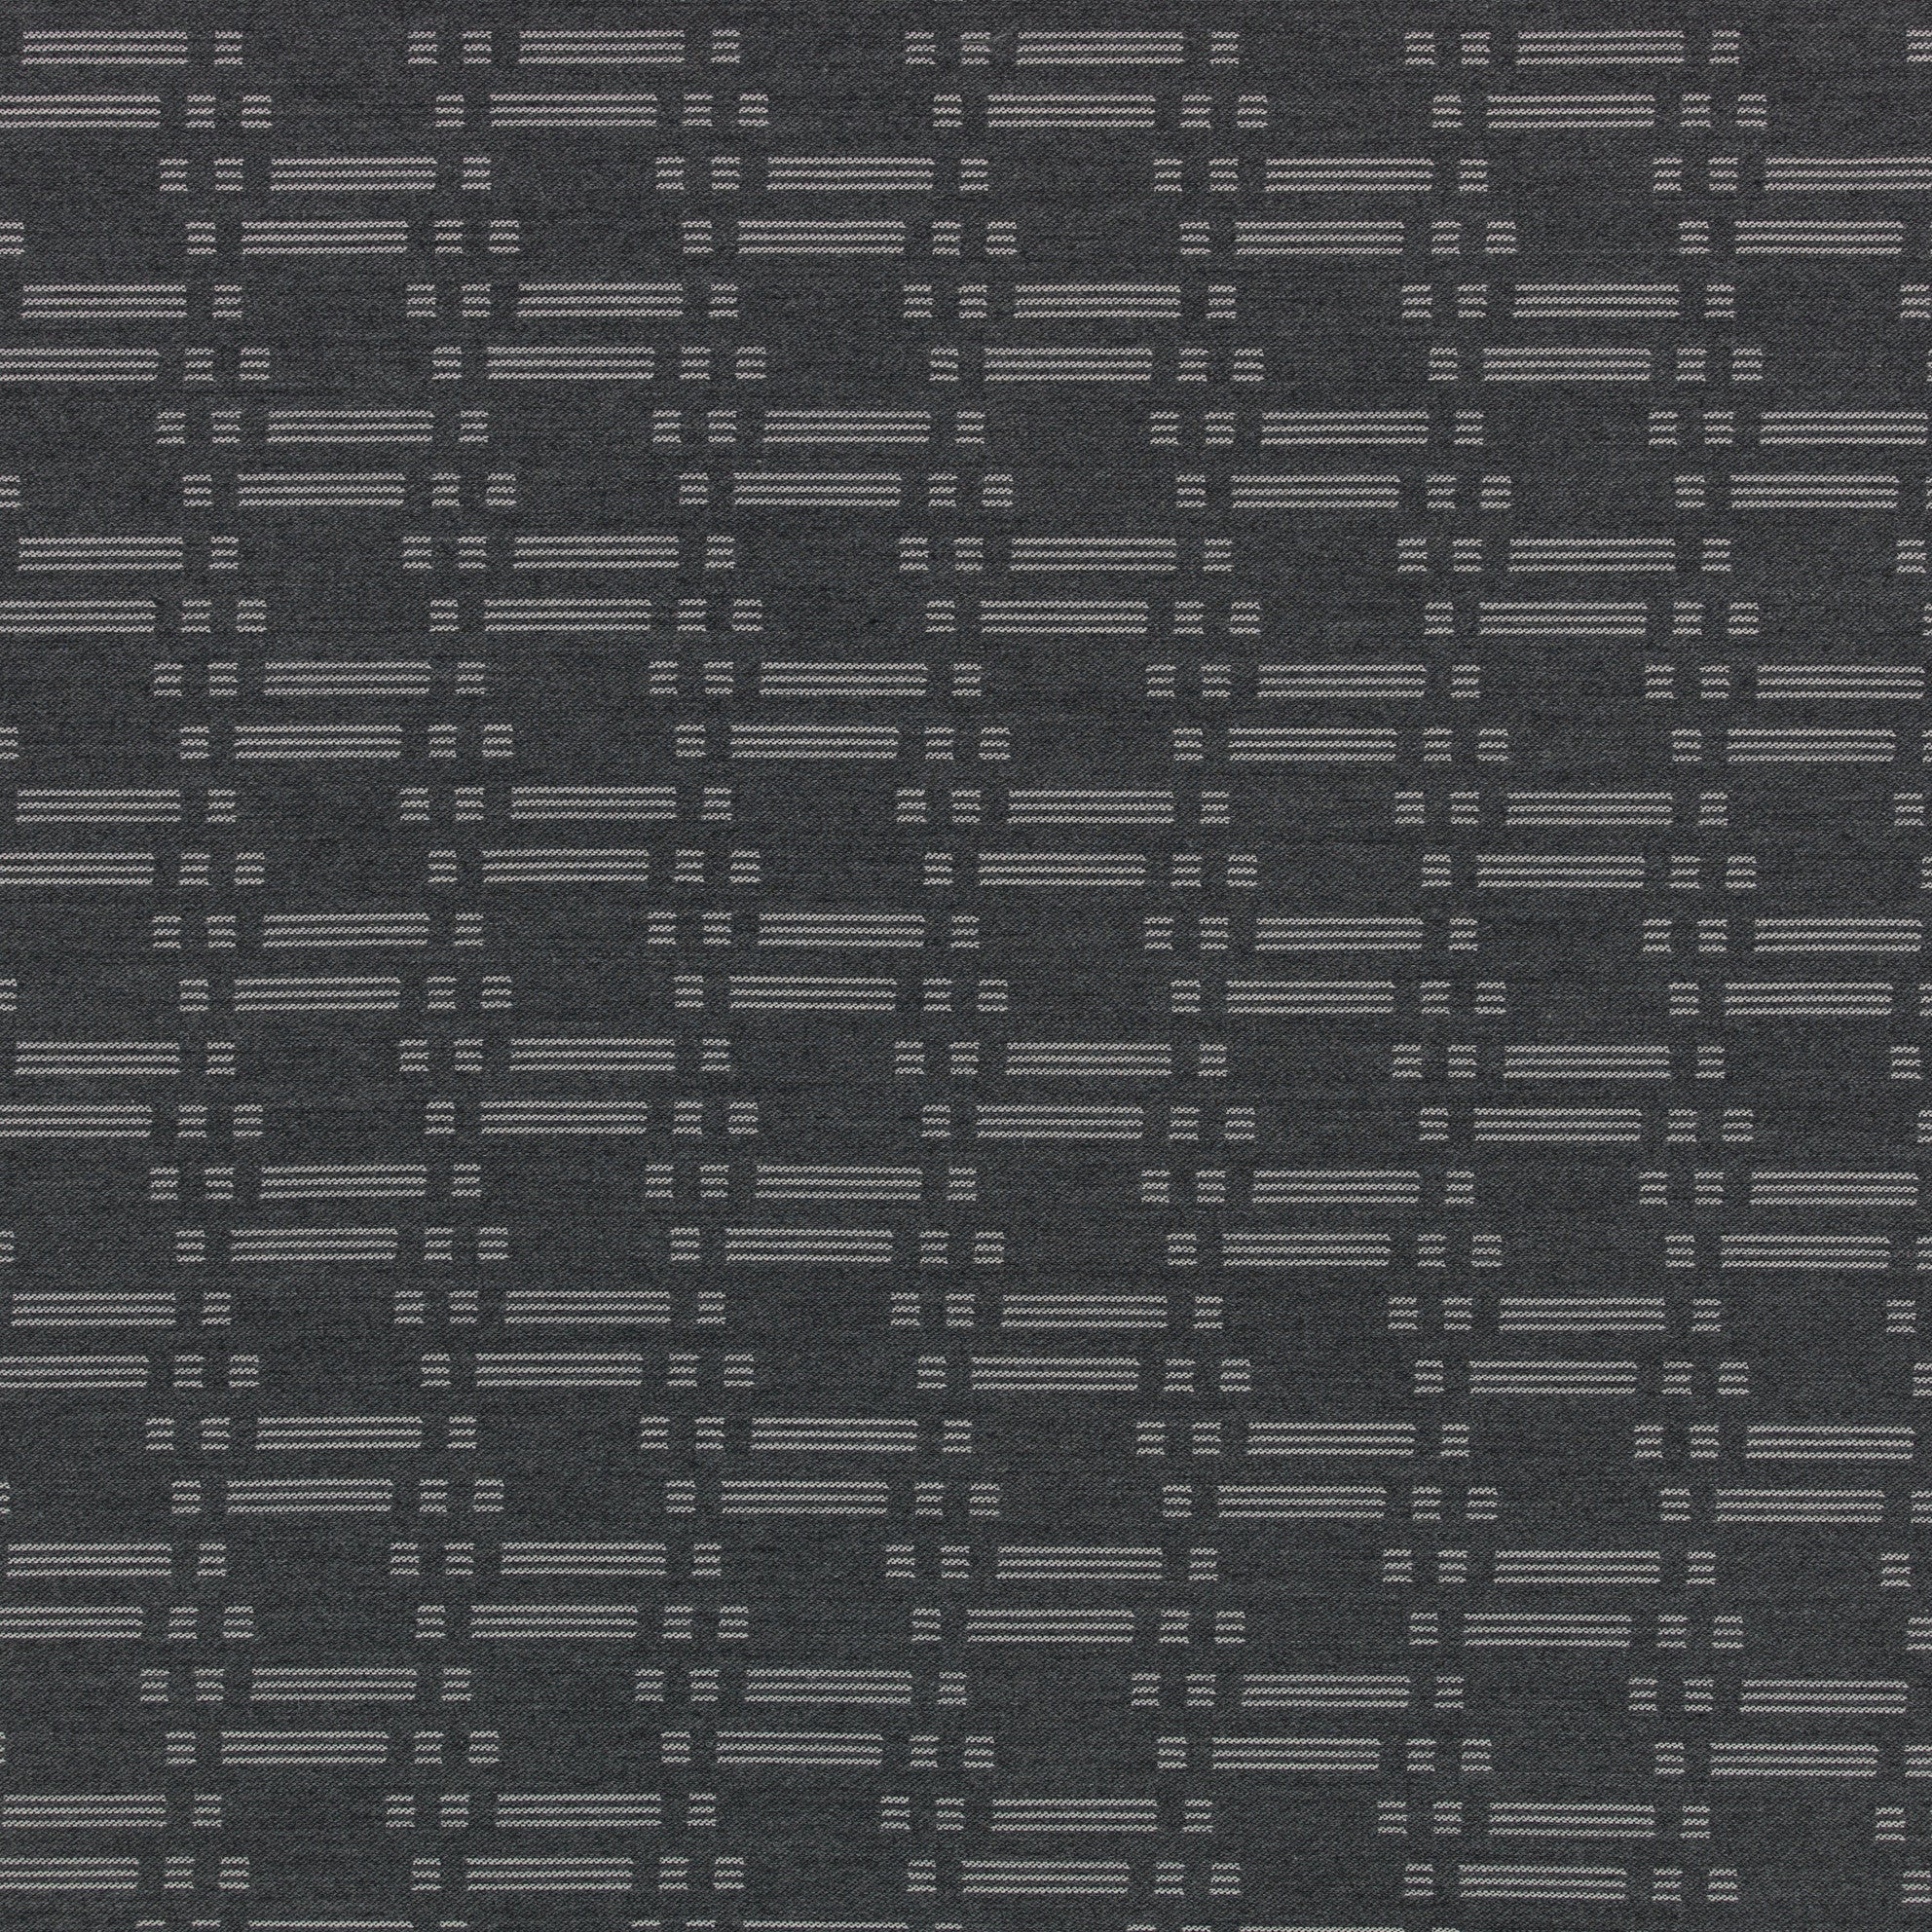 Triton Contract Furnishing Fabric - Grey | Nicholas Engert Interiors